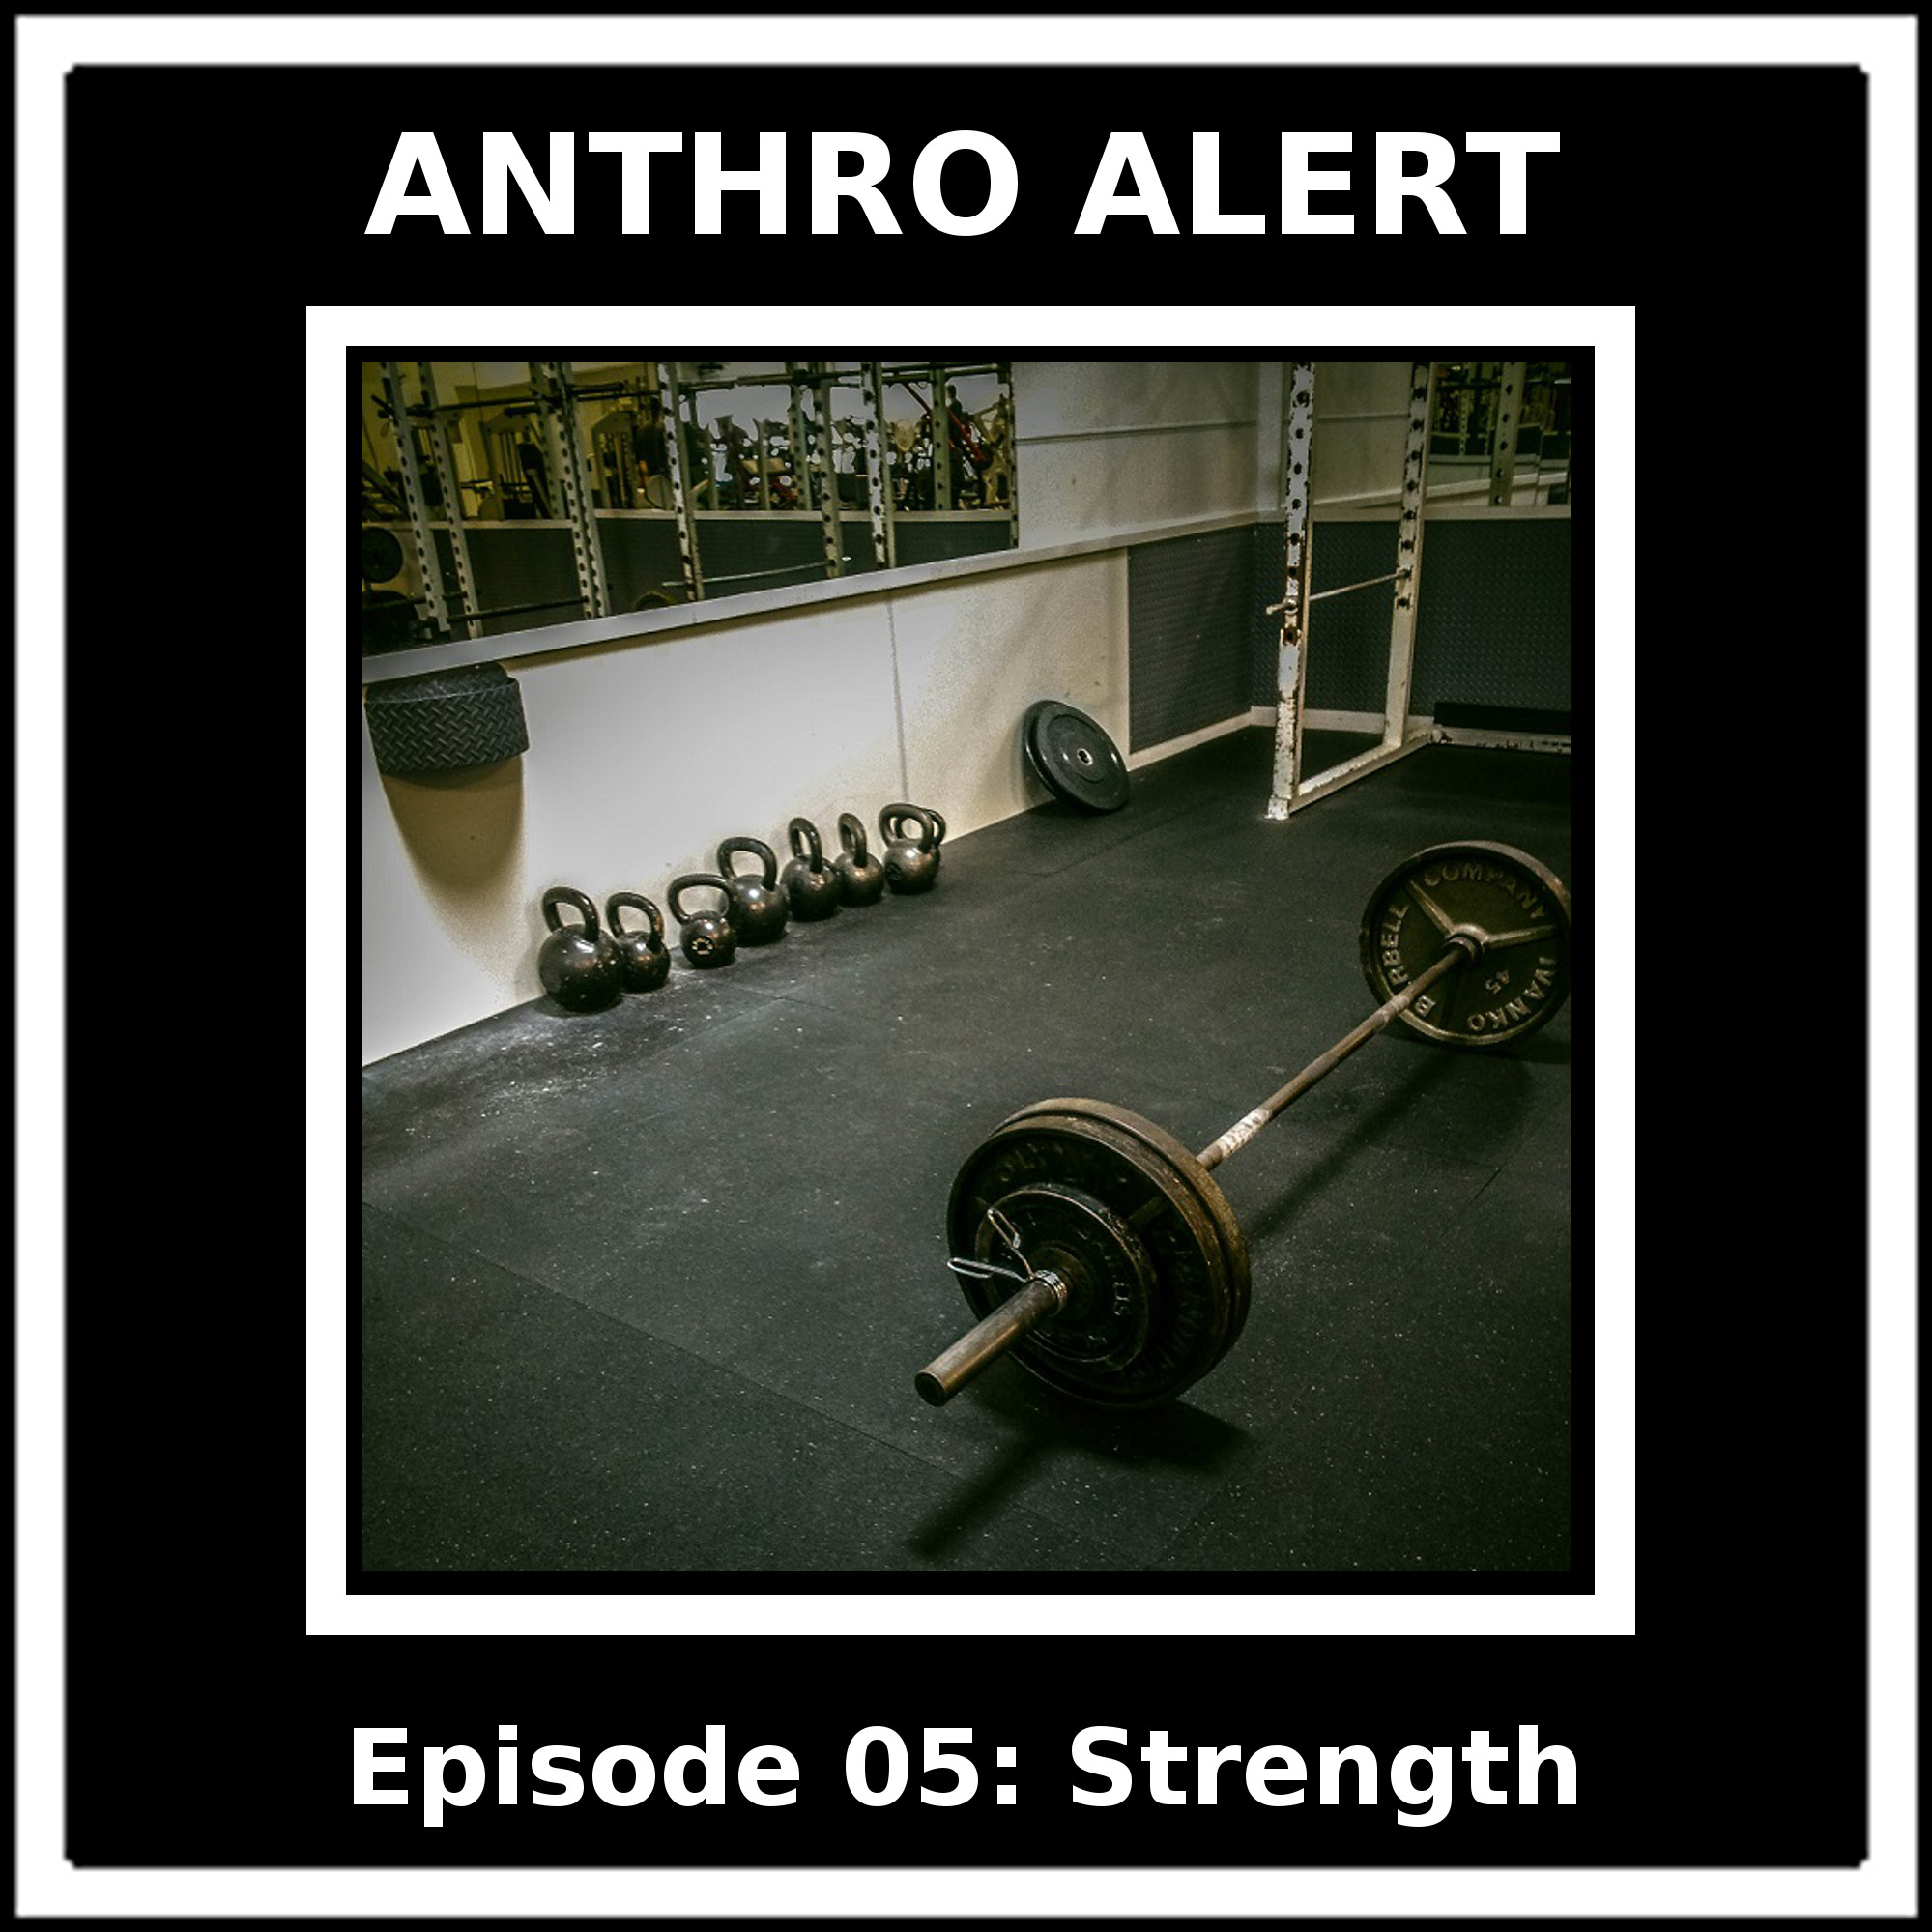 Episode 05: Strength